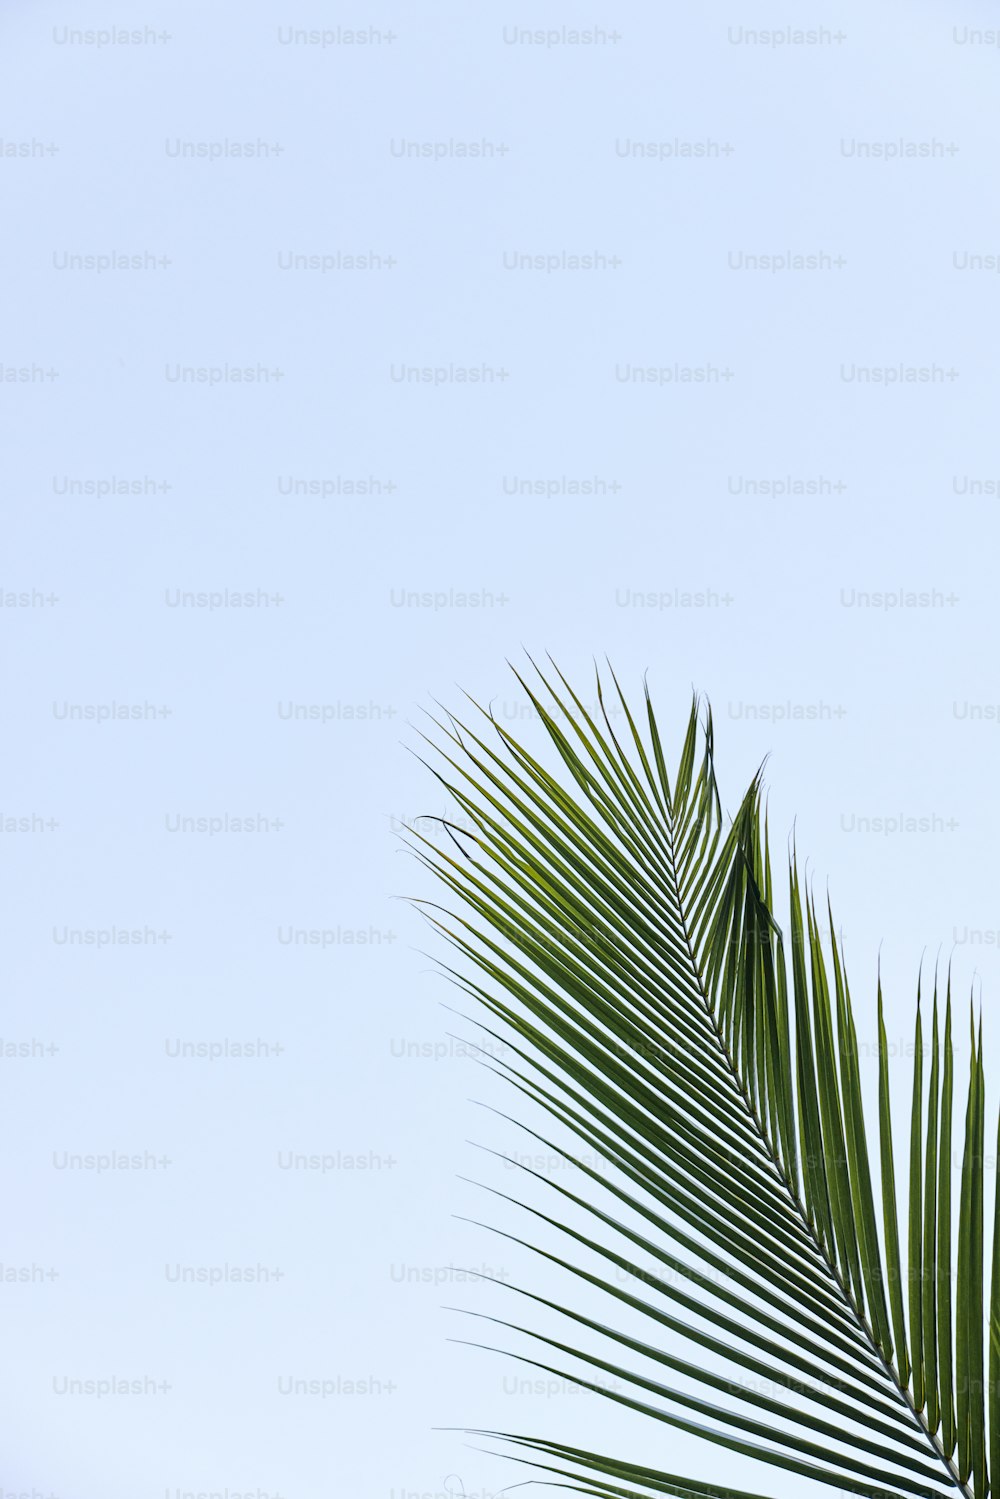 a palm tree leaves against a blue sky